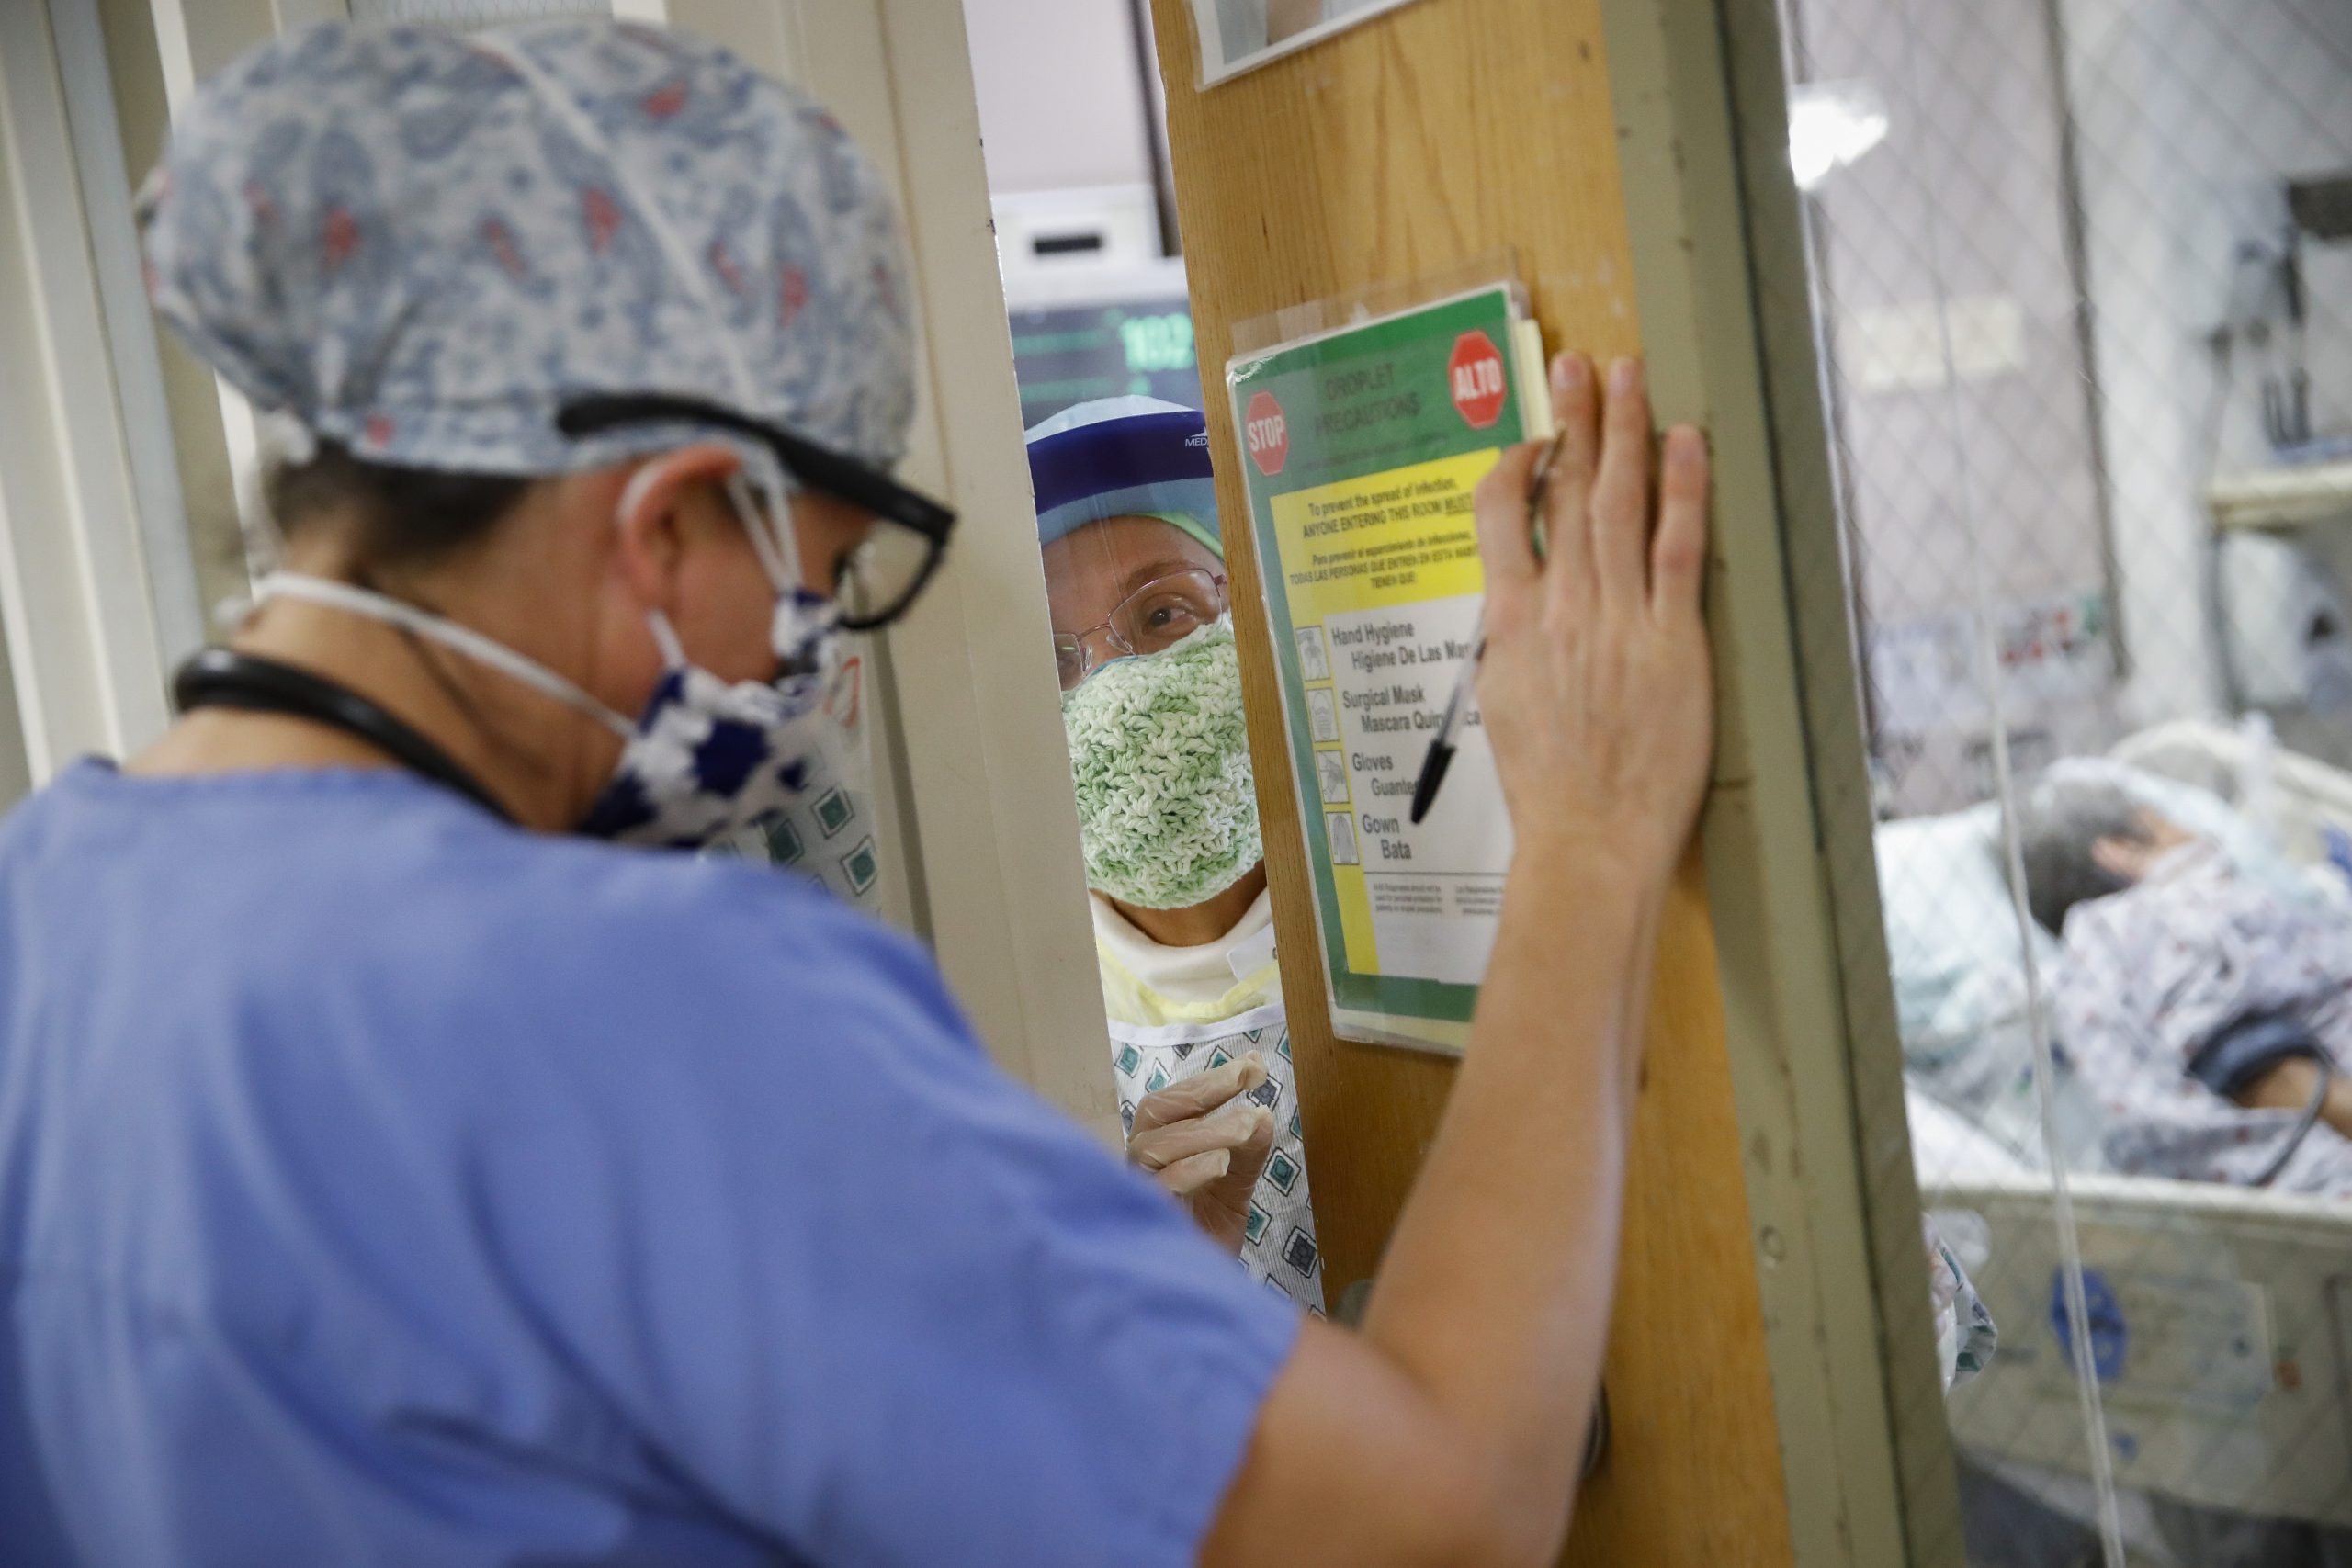 A nurse wearing a mask speaks to a physician wearing a mask inside an ICU